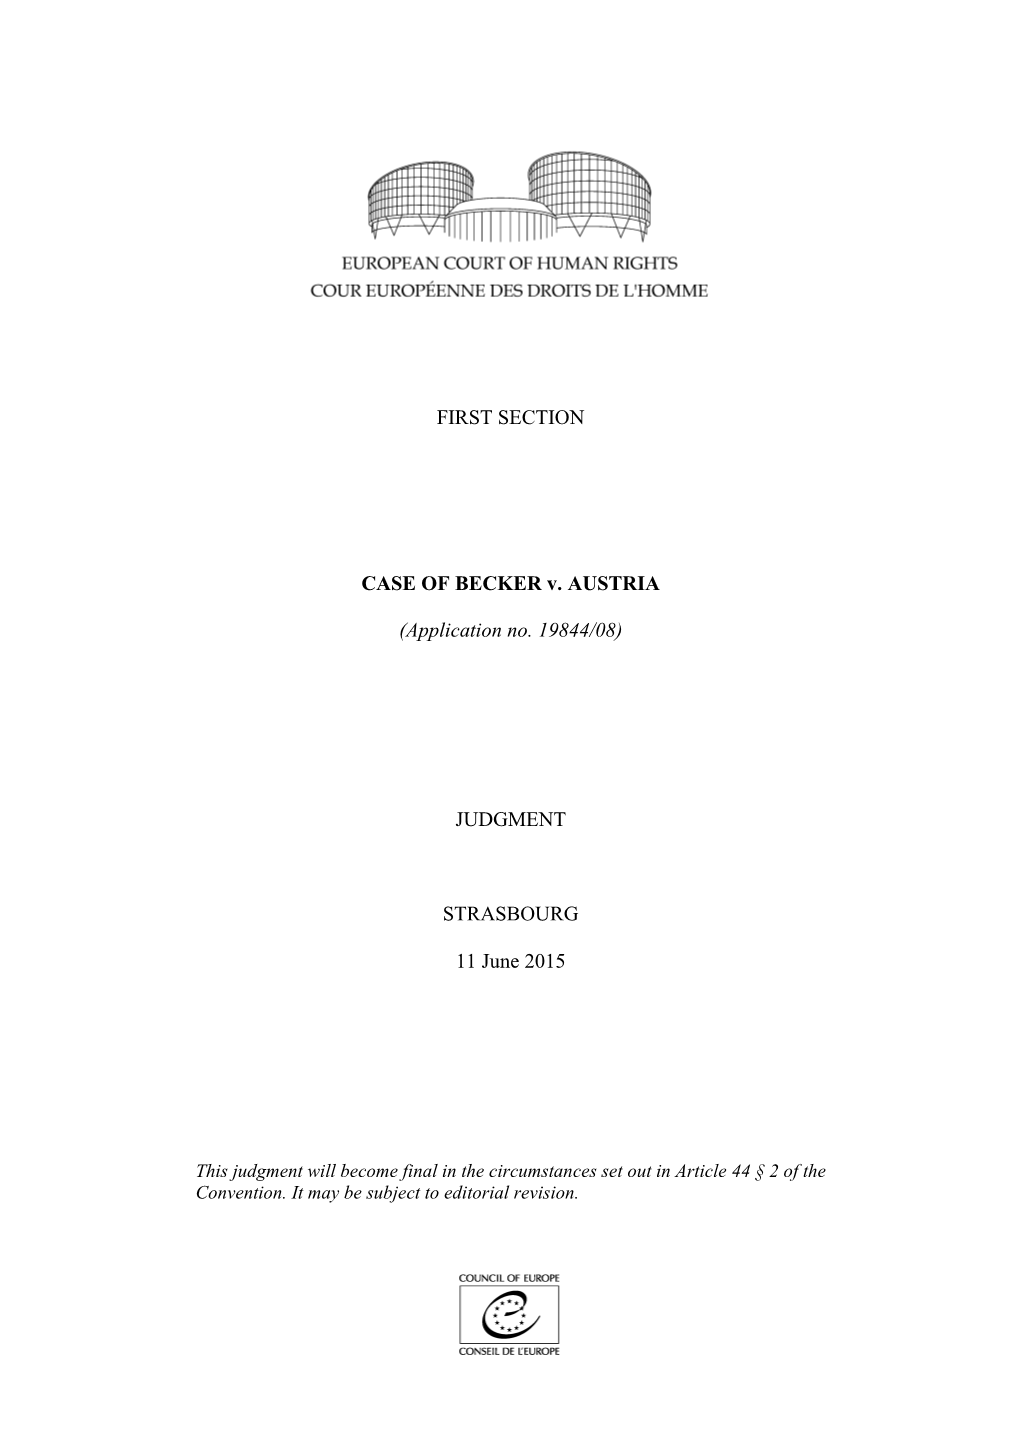 FIRST SECTION CASE of BECKER V. AUSTRIA (Application No. 19844/08) JUDGMENT STRASBOURG 11 June 2015